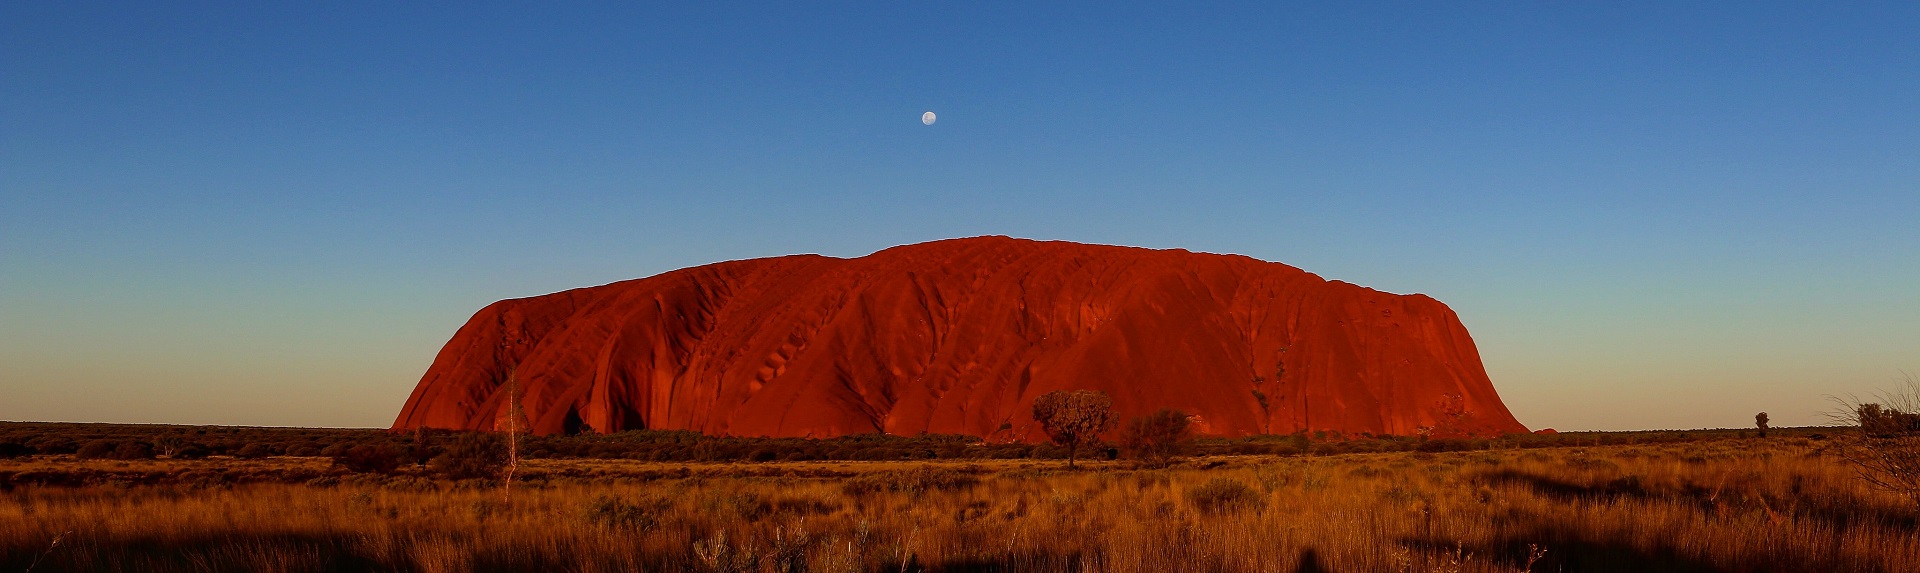 Where can I watch the sunset in Uluru?